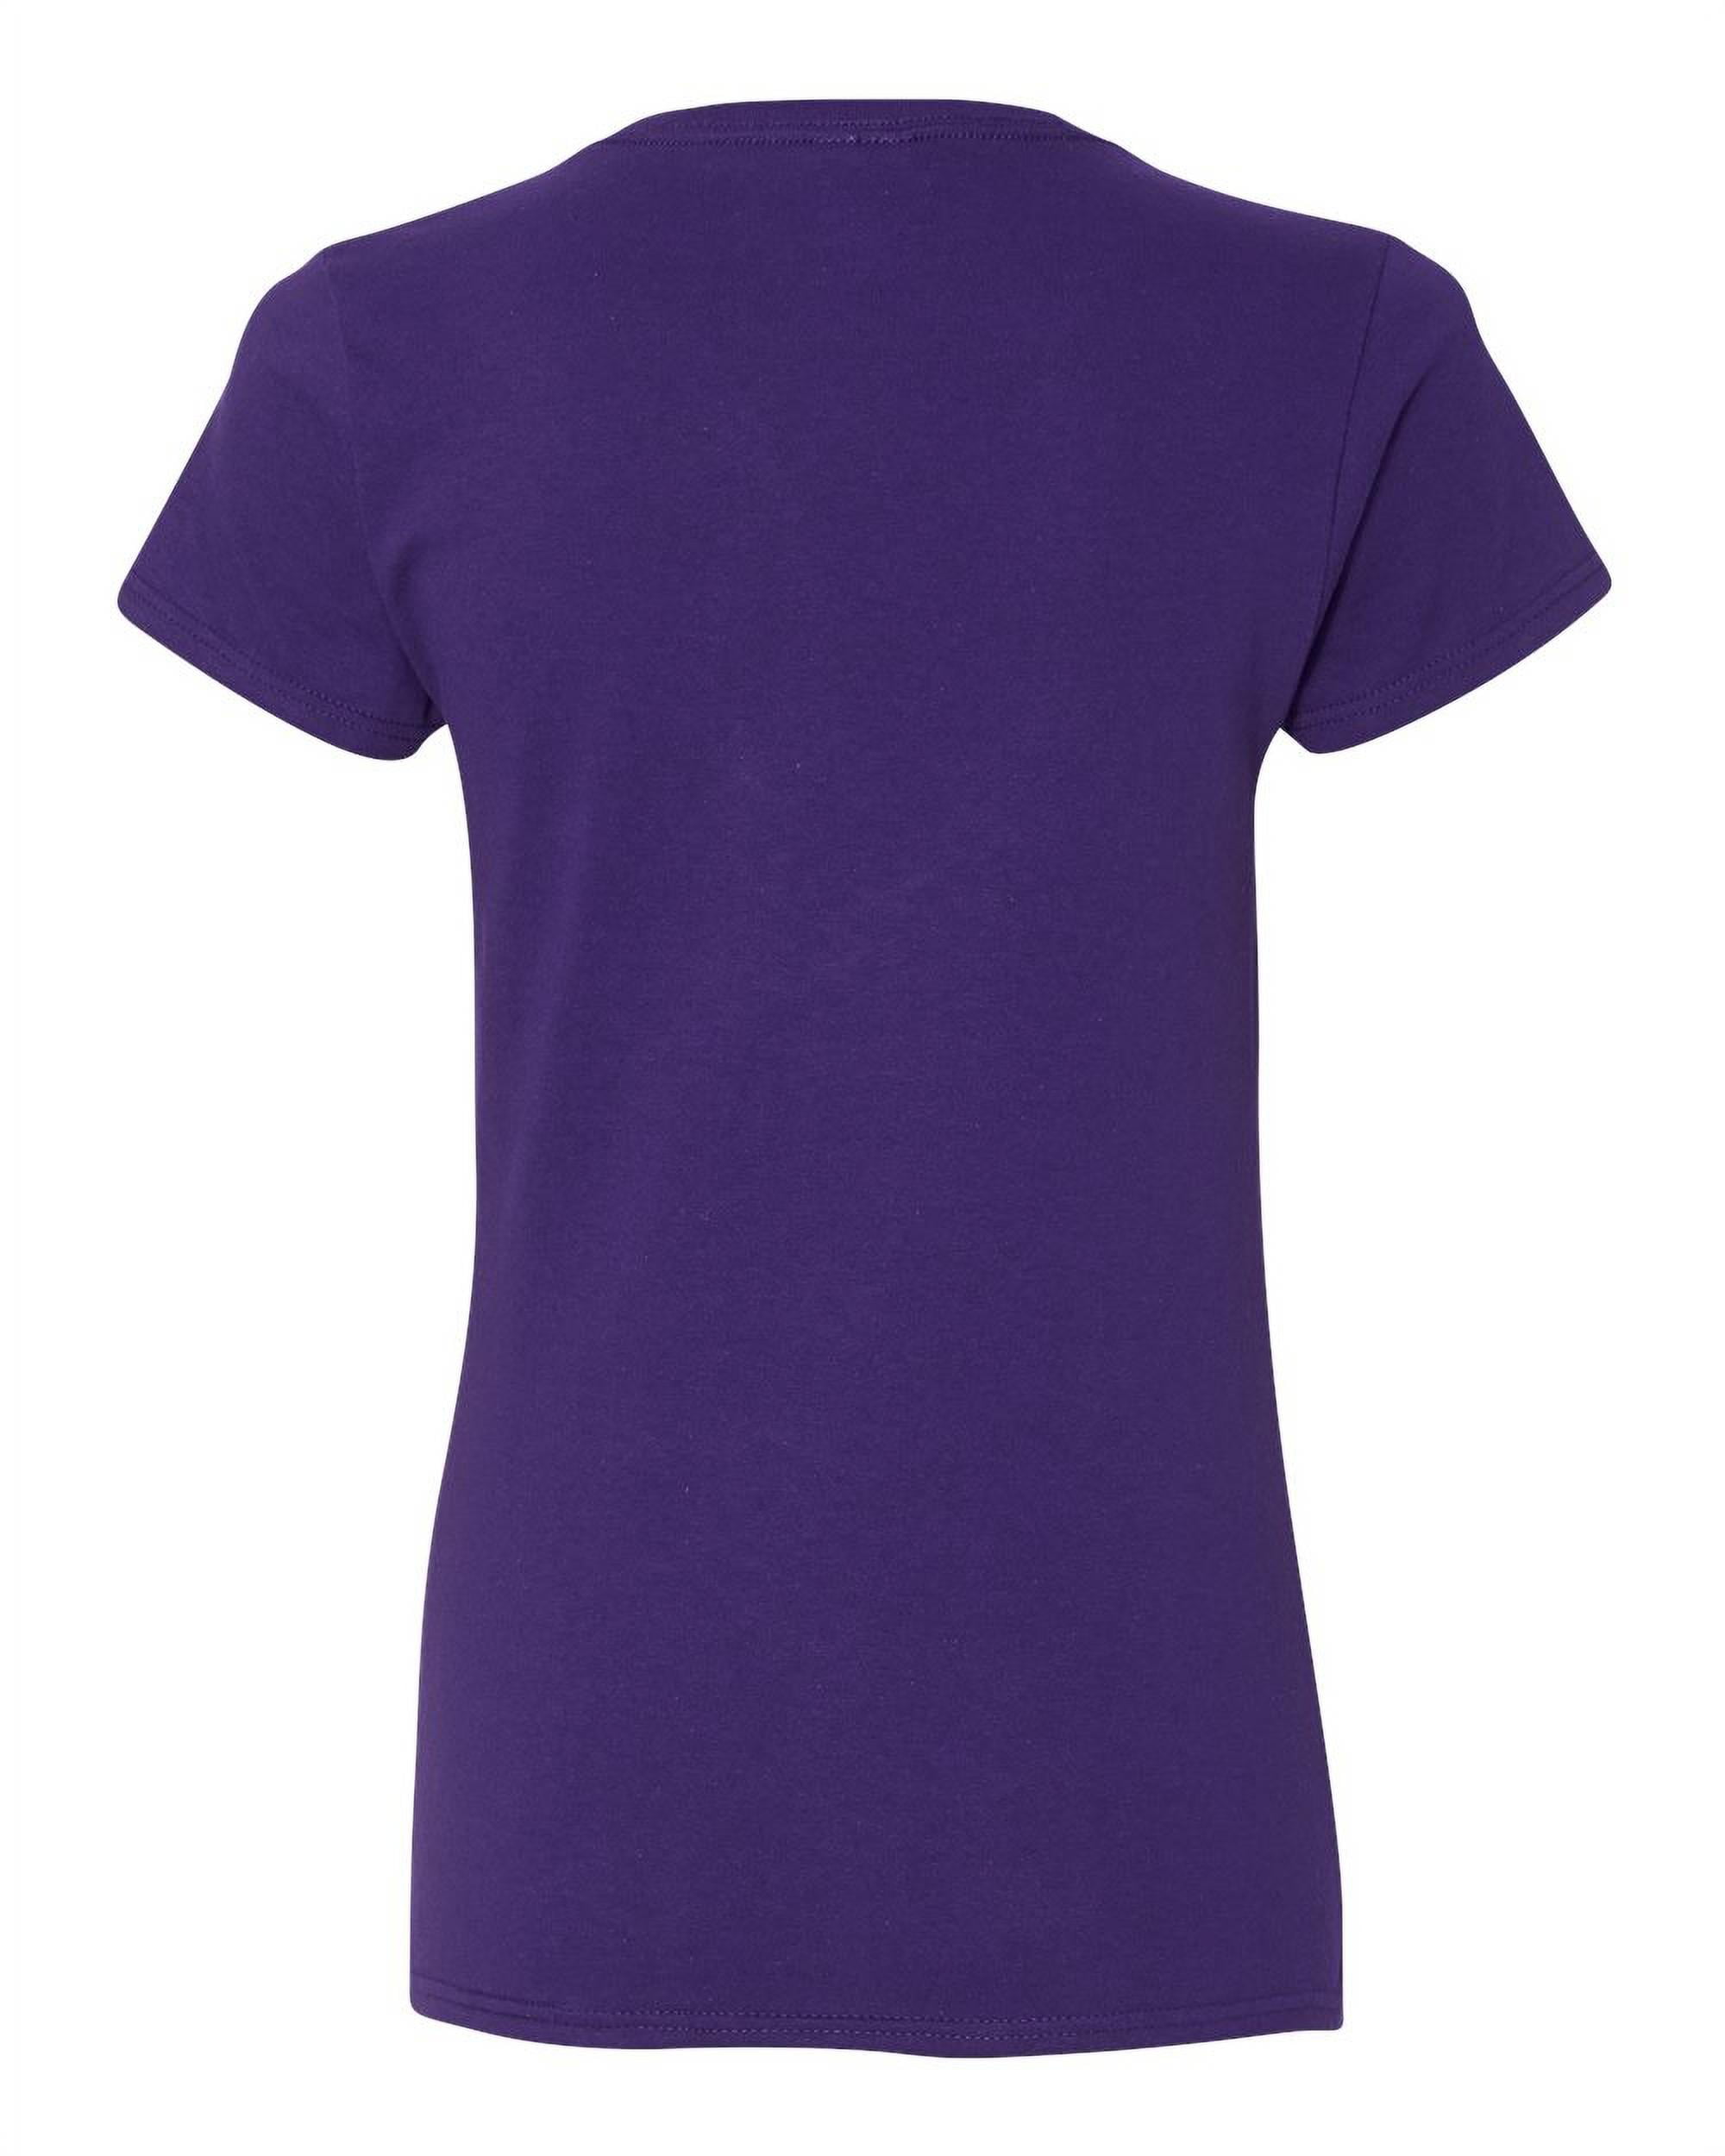 Nib - Women's T-Shirt V-Neck Short Sleeve - Pirate Costume, Size: Small, Purple